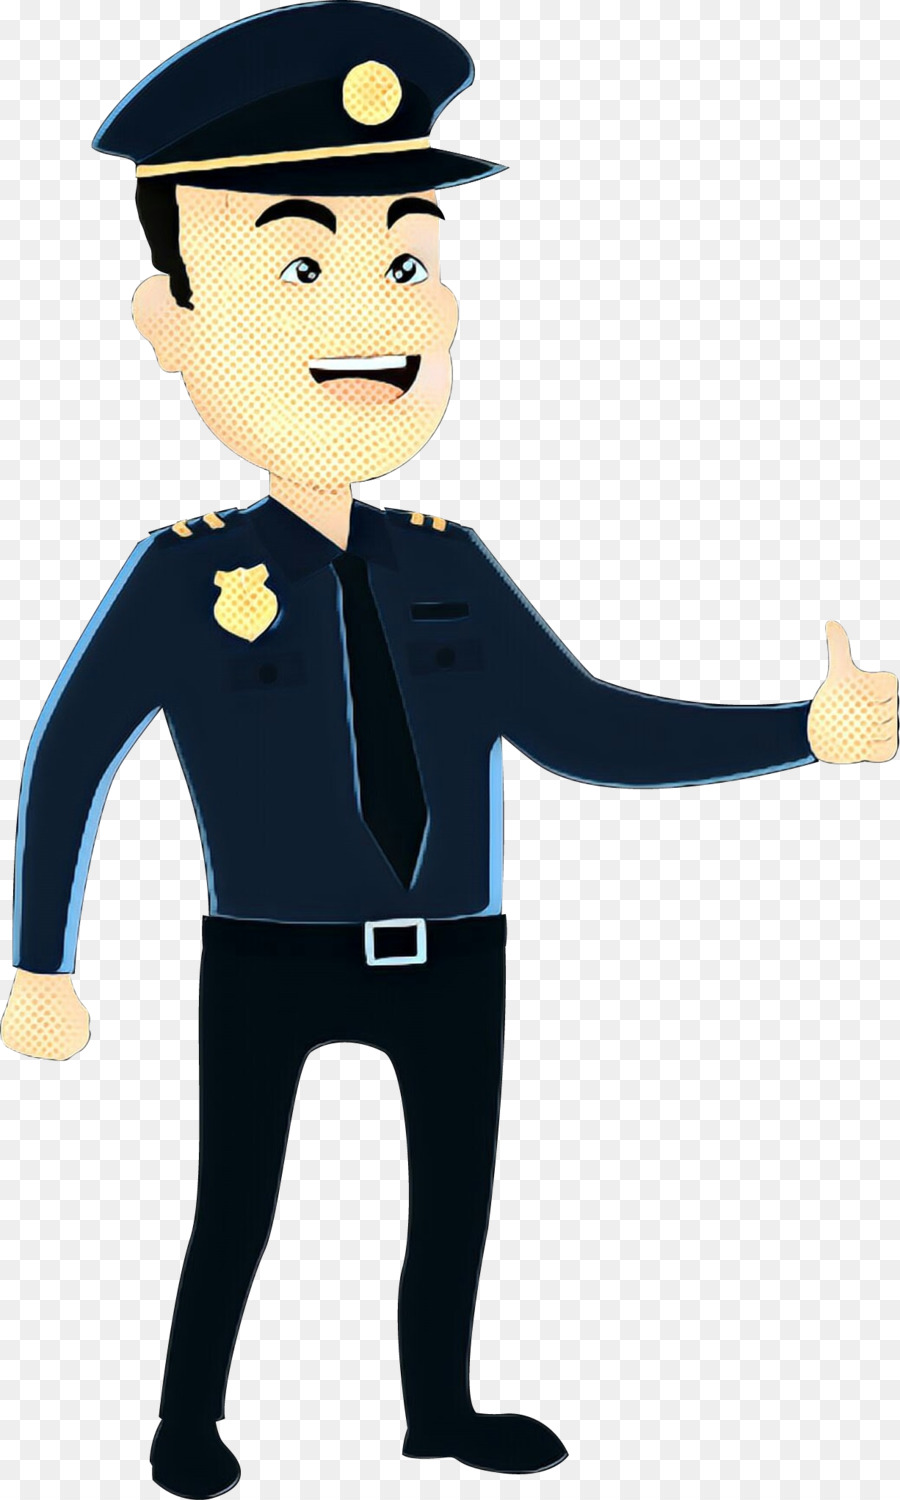 cartoon police officer official police clip art png download - 1226*2043 -  Free Transparent Pop Art png Download. - CleanPNG / KissPNG